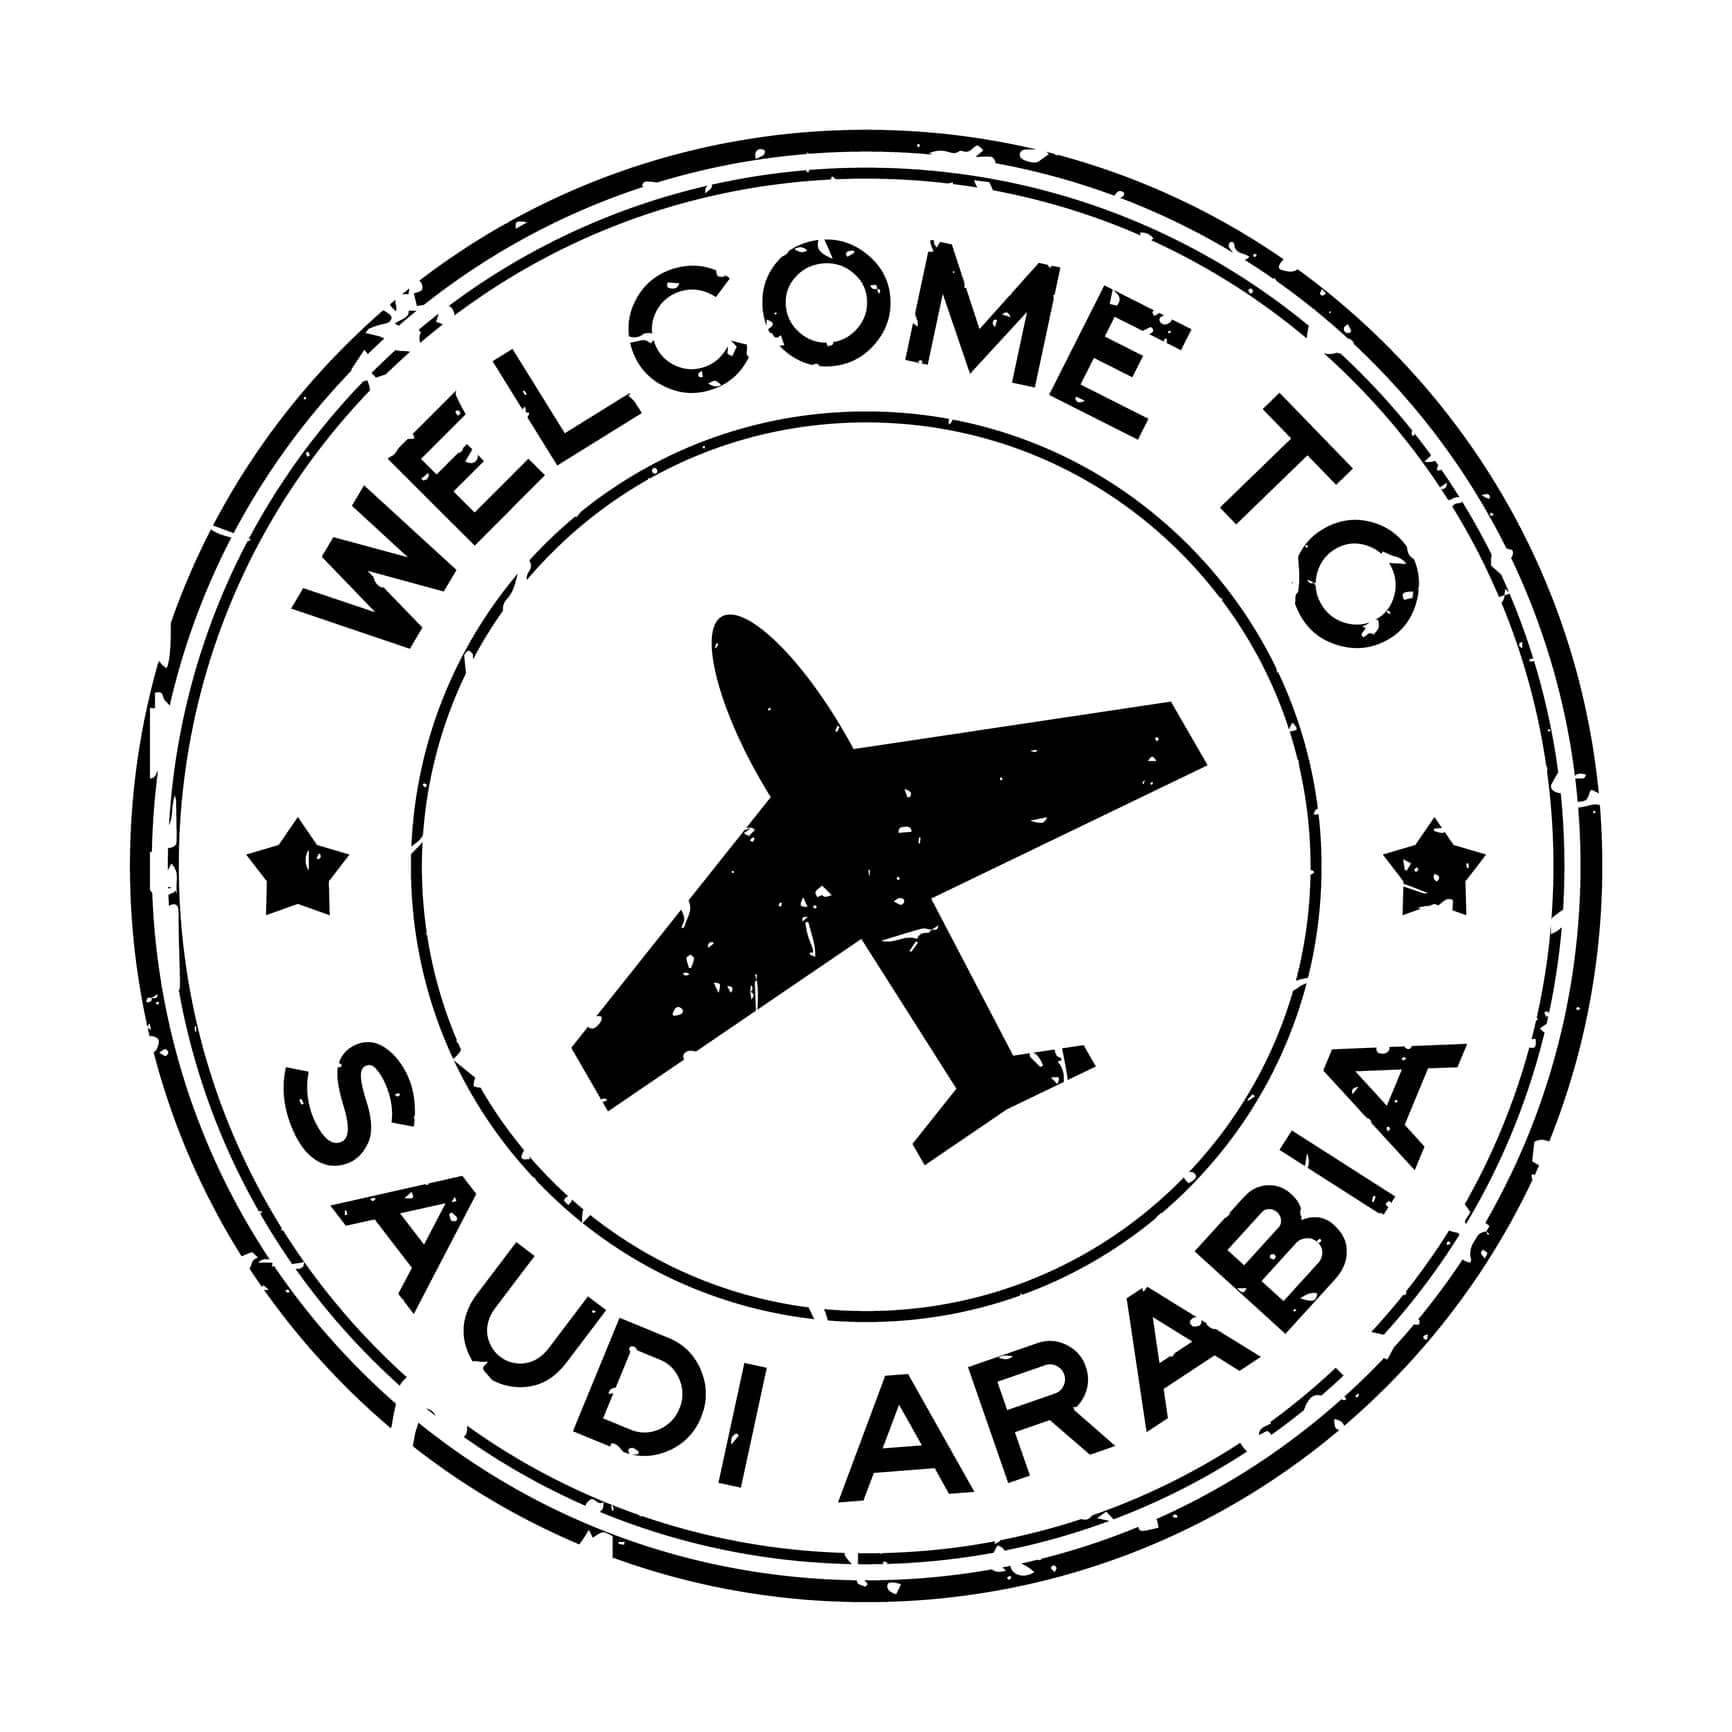 Welcome to Saudi Arabia sign with an airplane